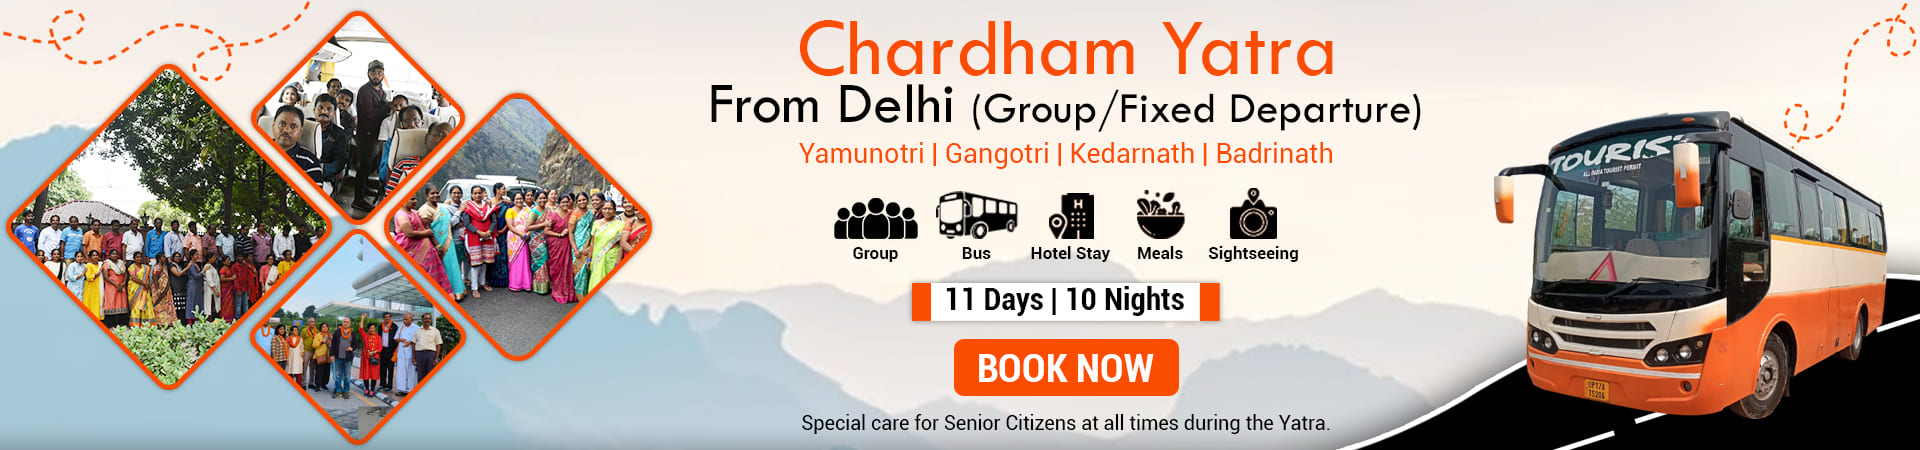 Chardham yatra group fixed departure